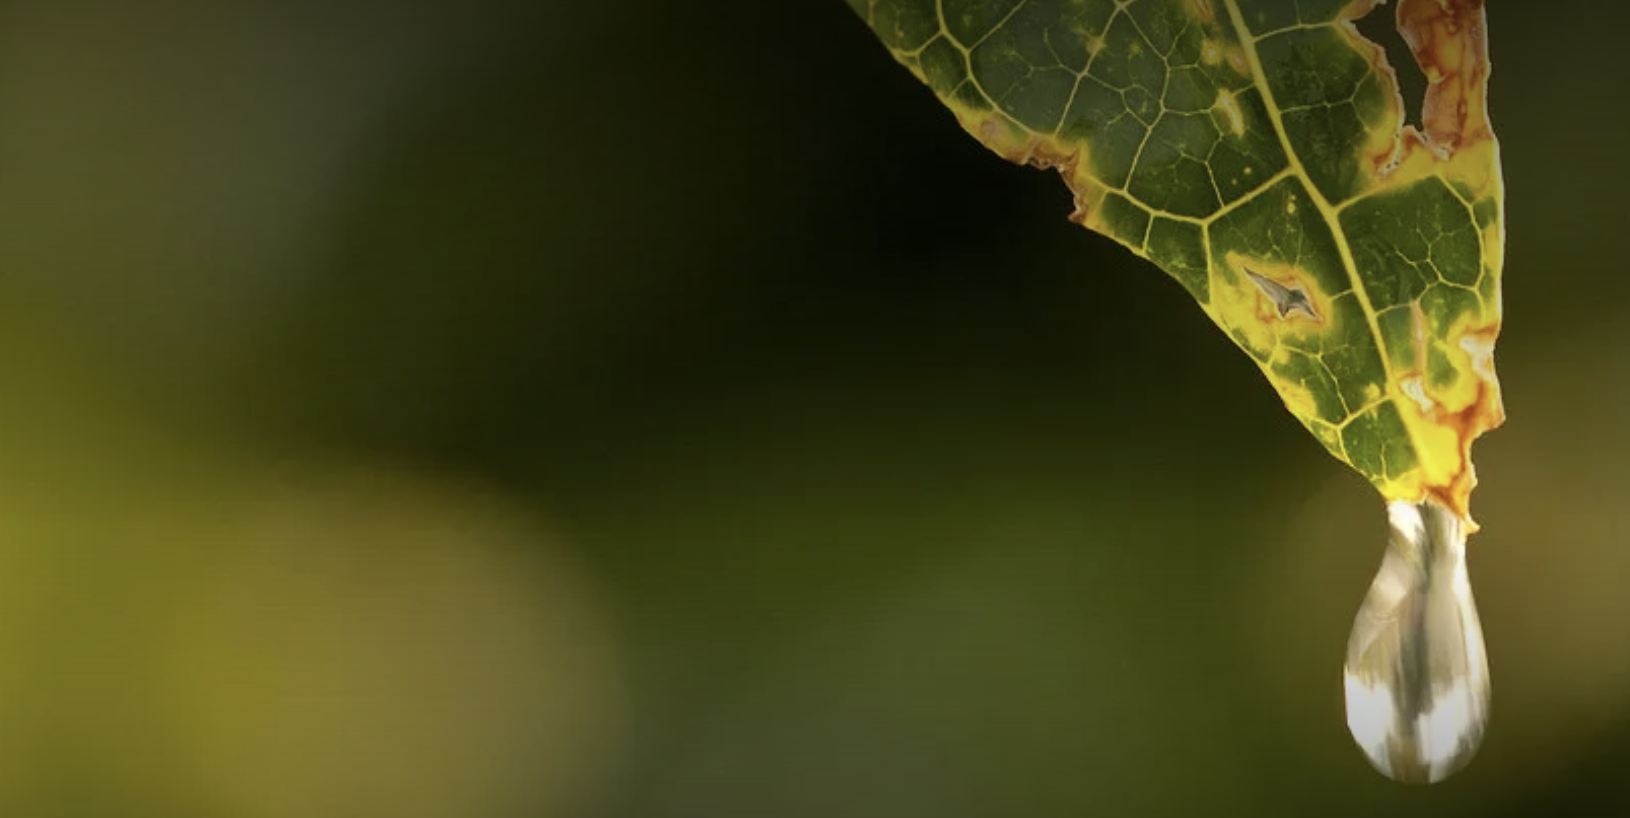 Leaf and droplet